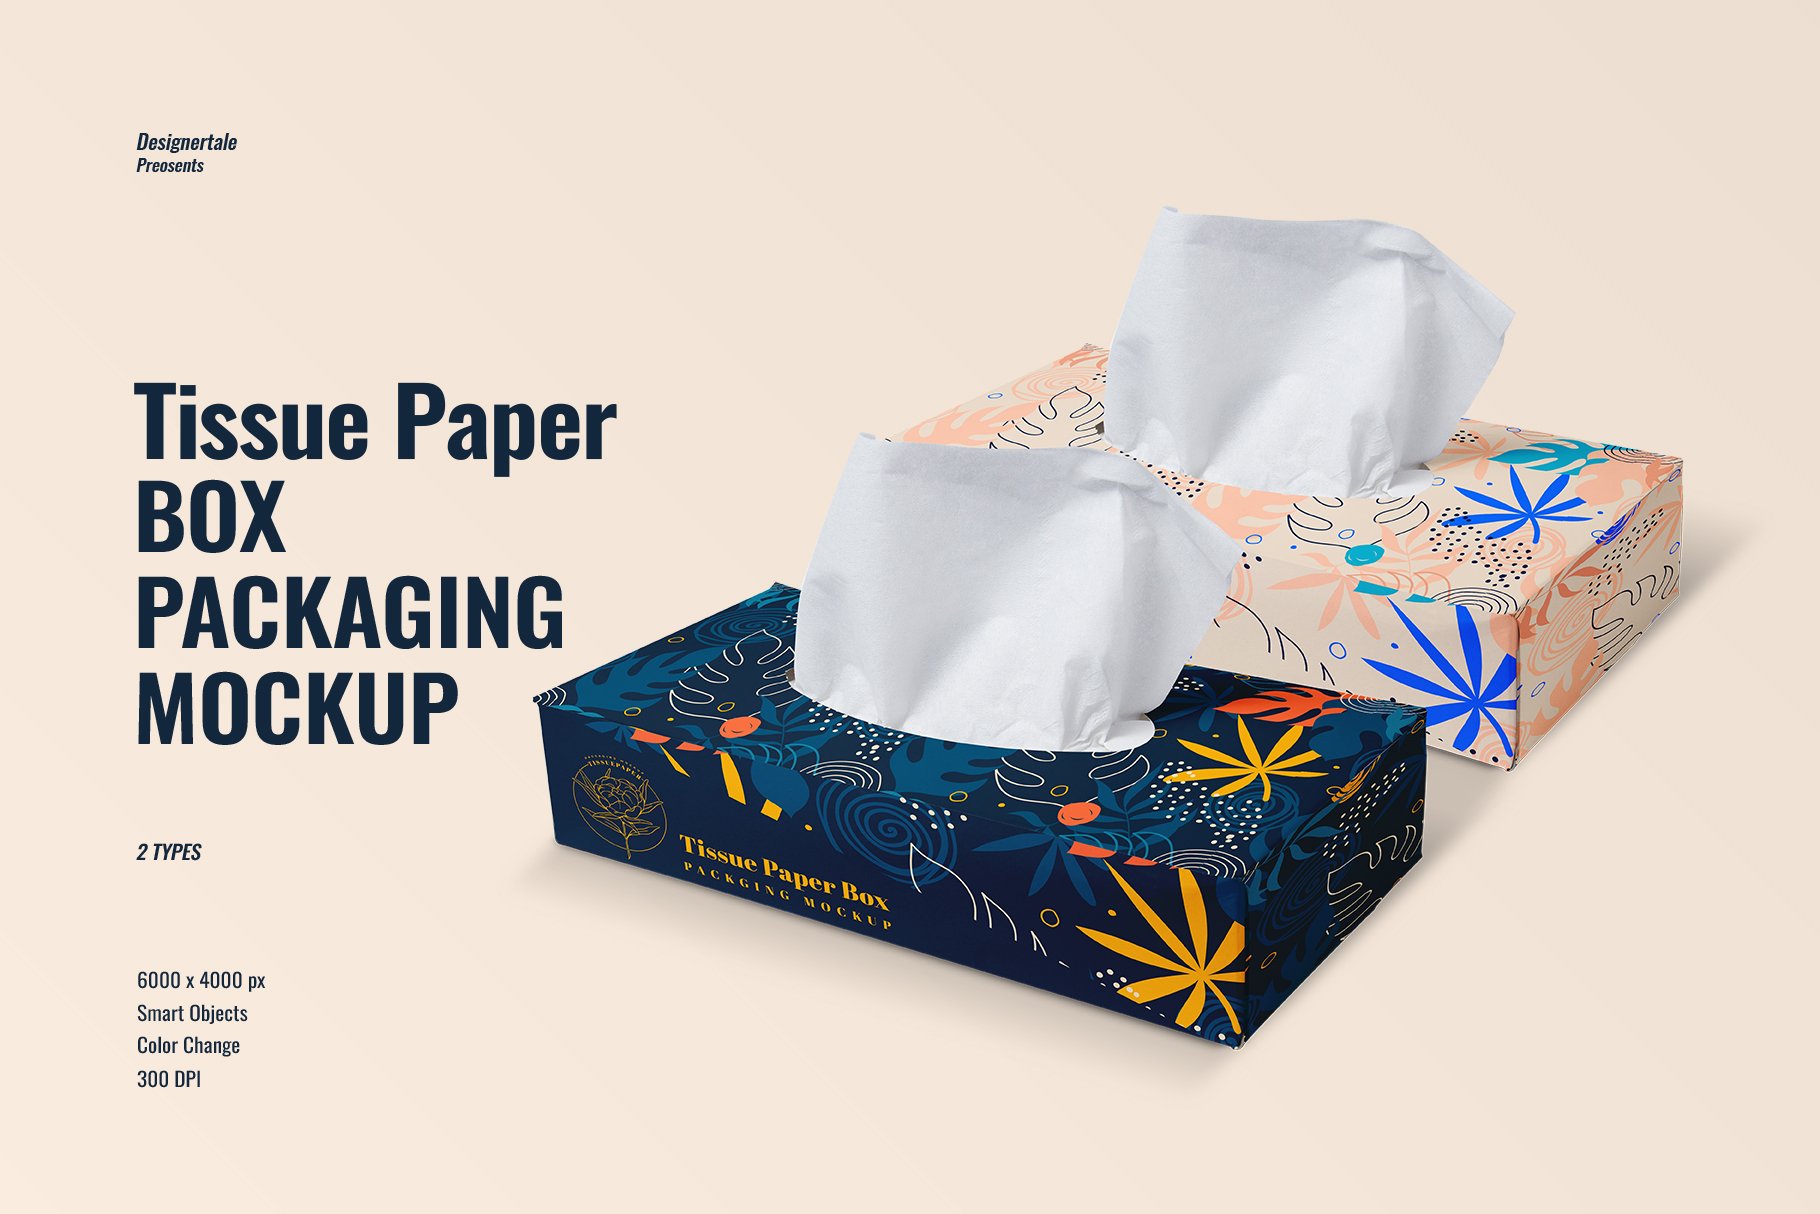 https://designcuts.b-cdn.net/wp-content/uploads/2022/07/tissue-paper-box-packaging-mockup-preview-1.jpg